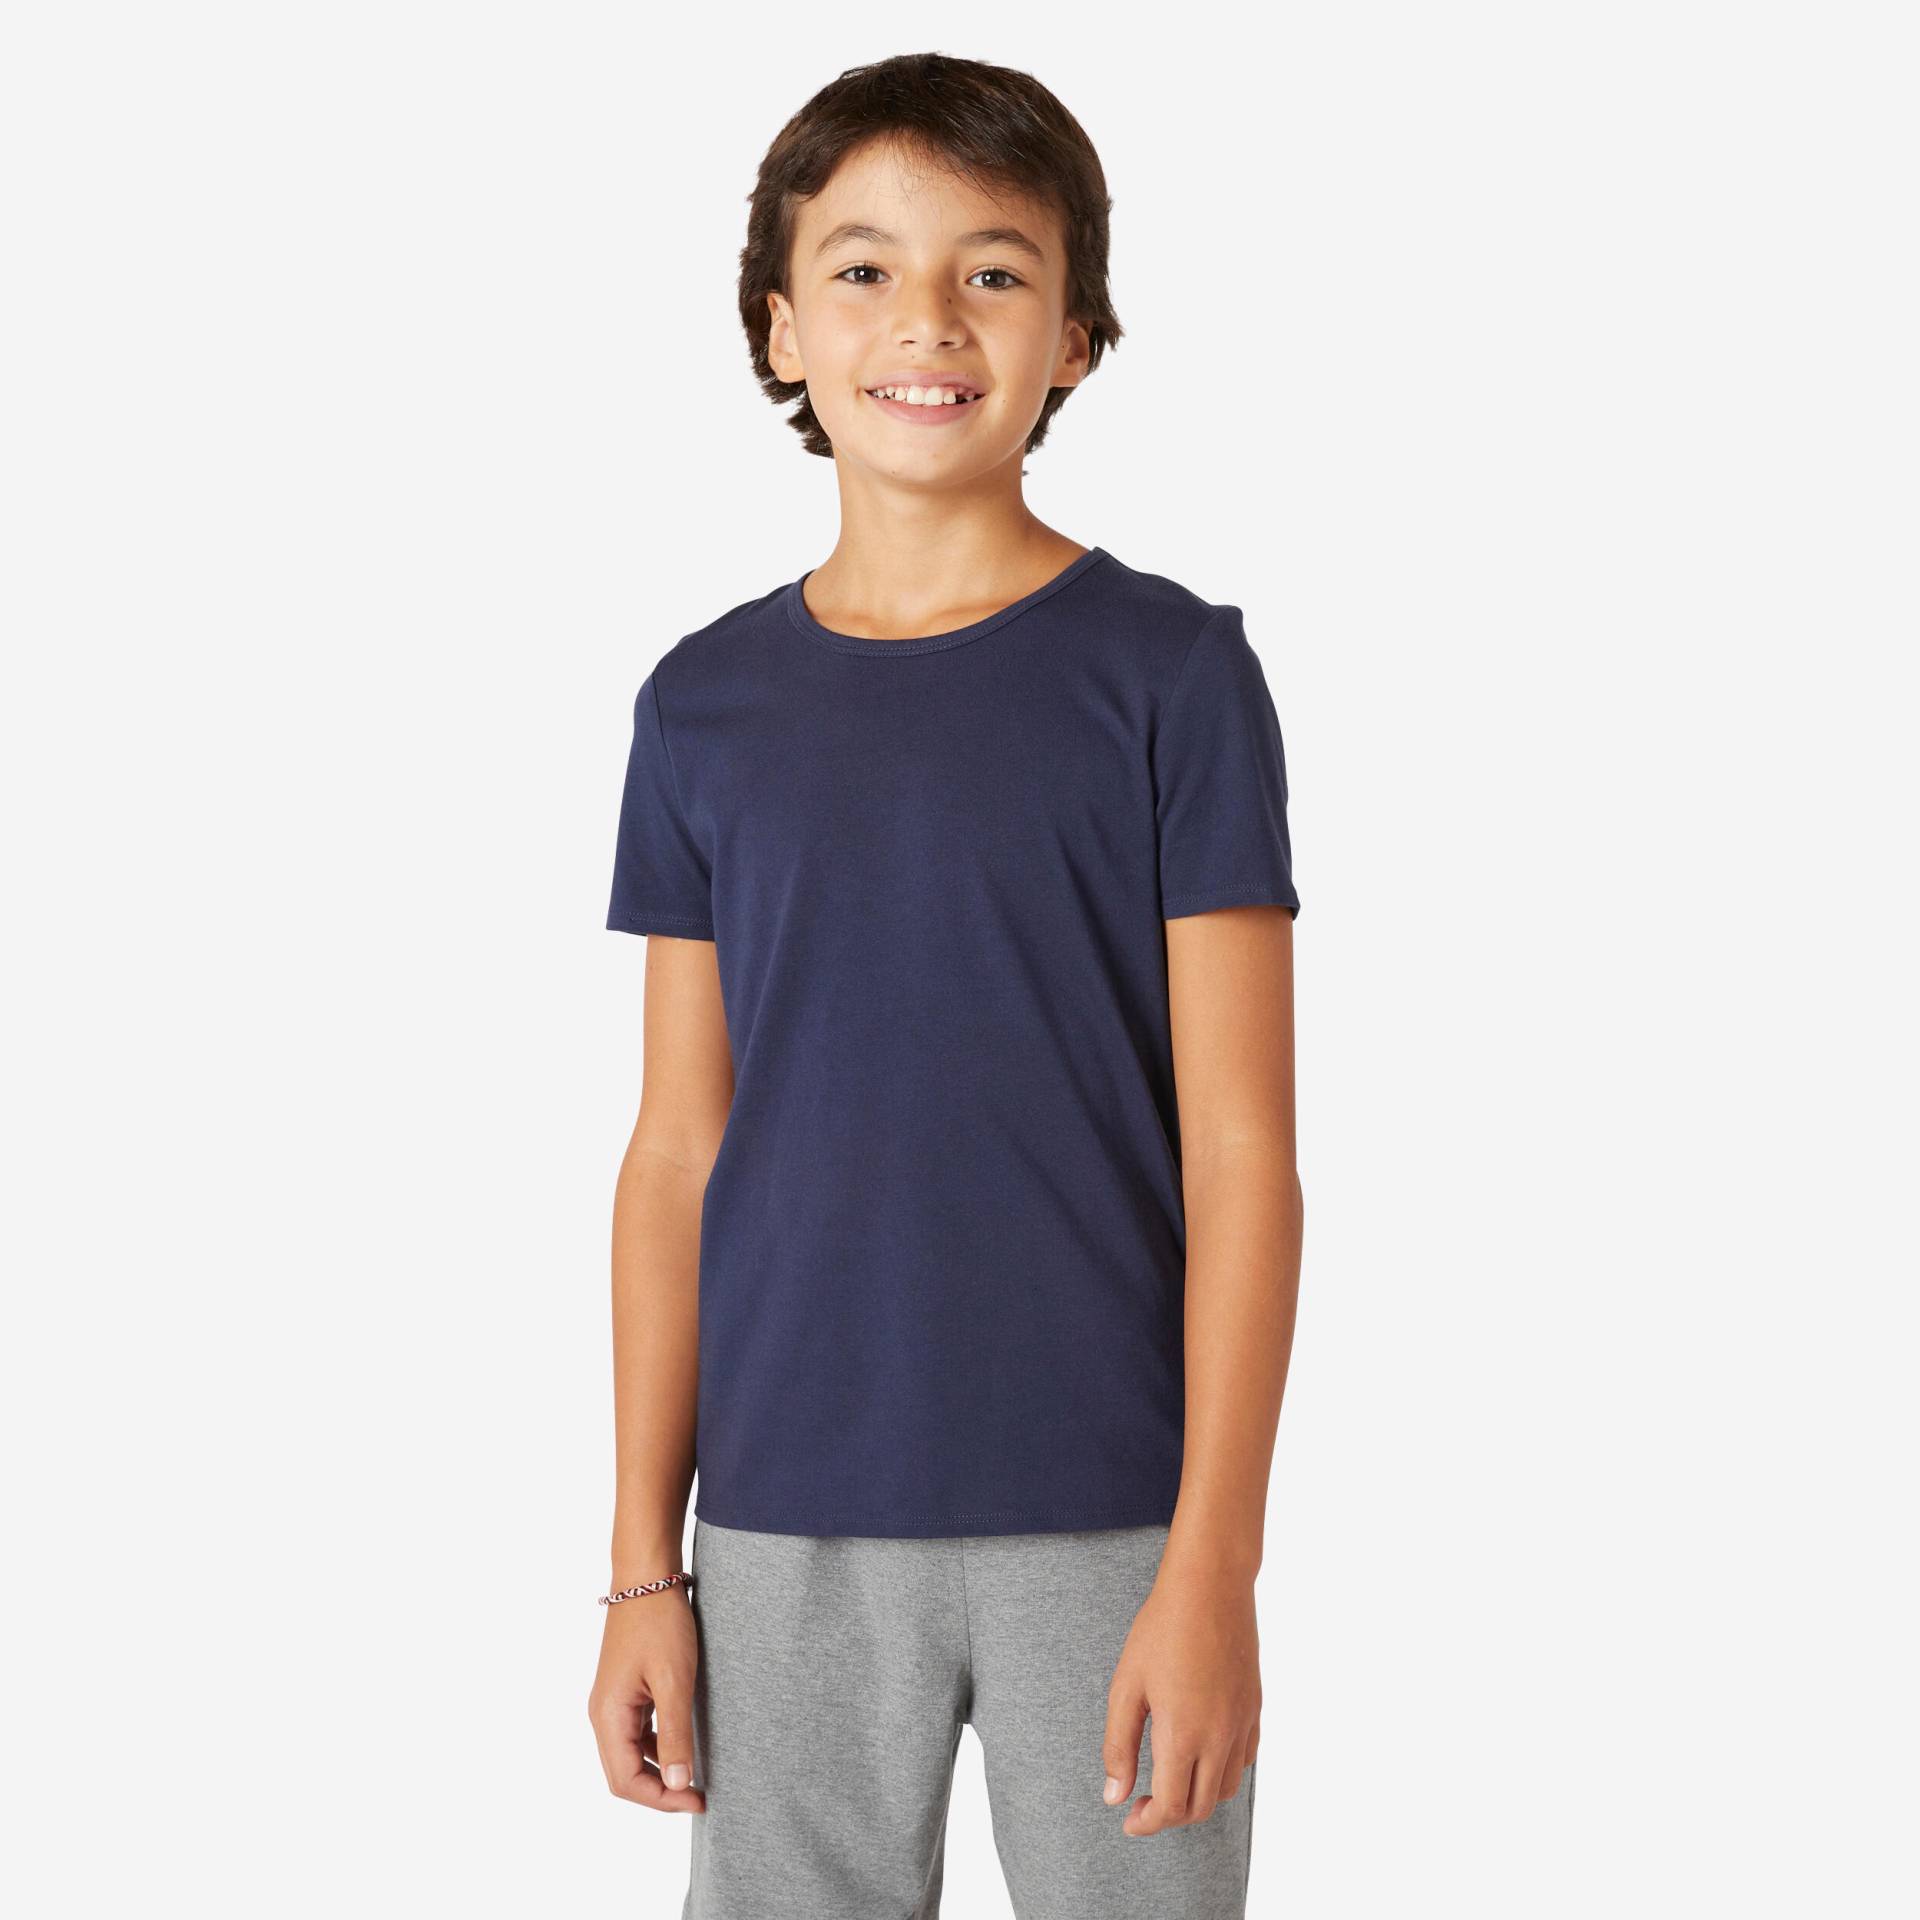 T-Shirt Kinder Baumwolle Basic 100 - marienblau von Domyos